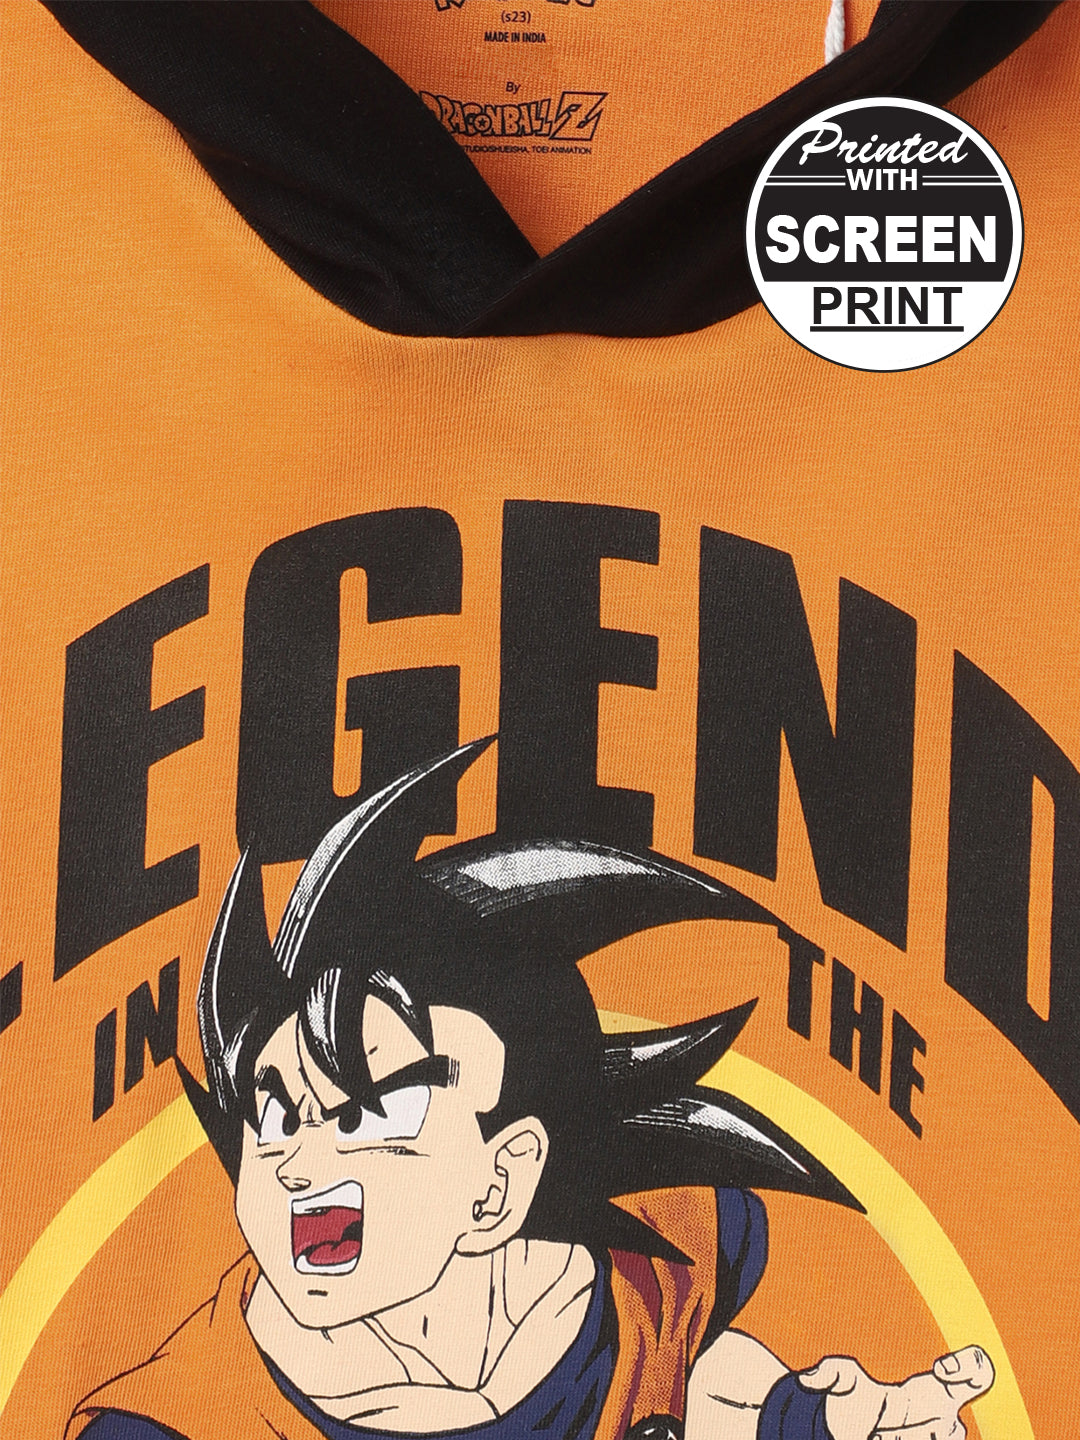 Kidsville Dragon Ball Z Printed Orange Tshirt For Boys